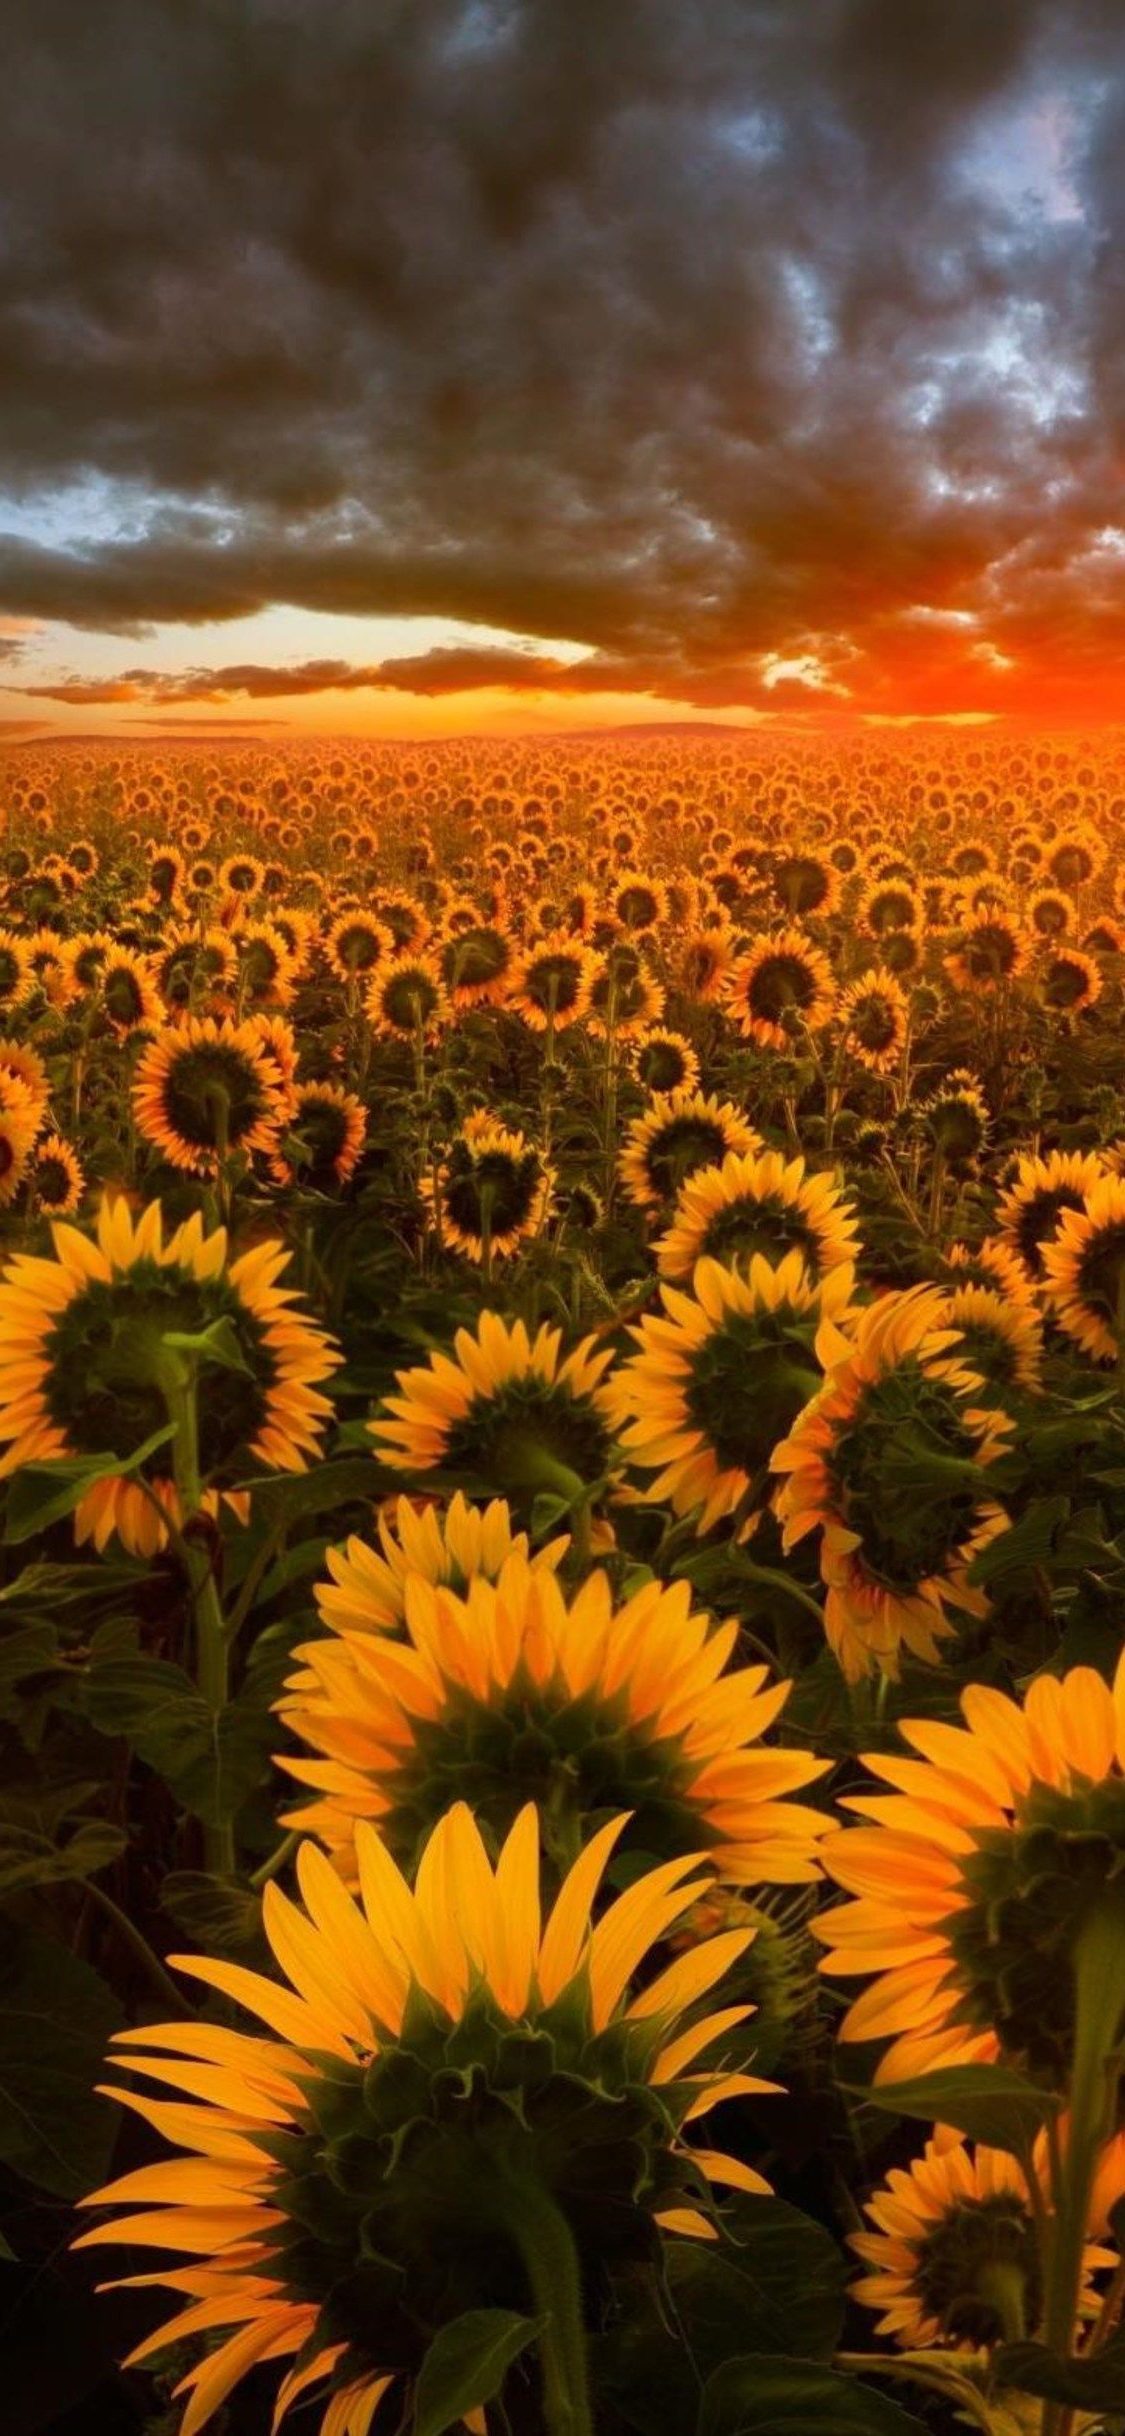 iphone wallpapers full hd,sunflower,nature,sky,flower,field